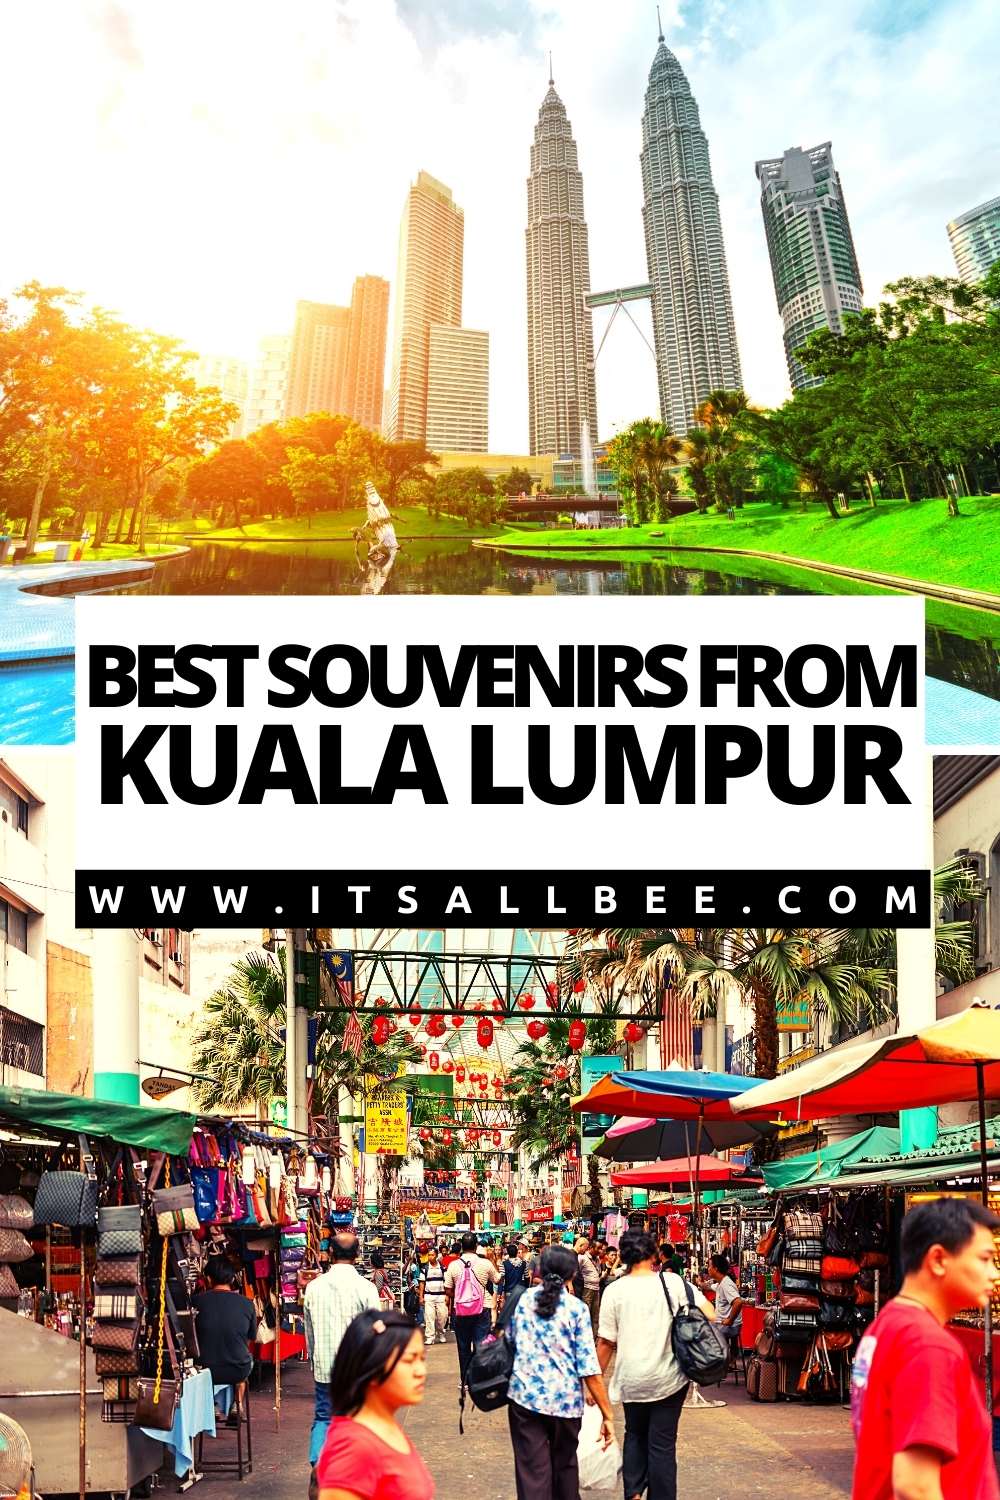  | Souvenirs From Kuala Lumpur | Best Souvenirs From Malaysia | Bukit Bintang Kuala Lumpur Shopping Mall | Shopping Cheap In Kuala Lumpur | Shopping In Malaysia Kuala Lumpur | Where To Shop In Kuala Lumpur